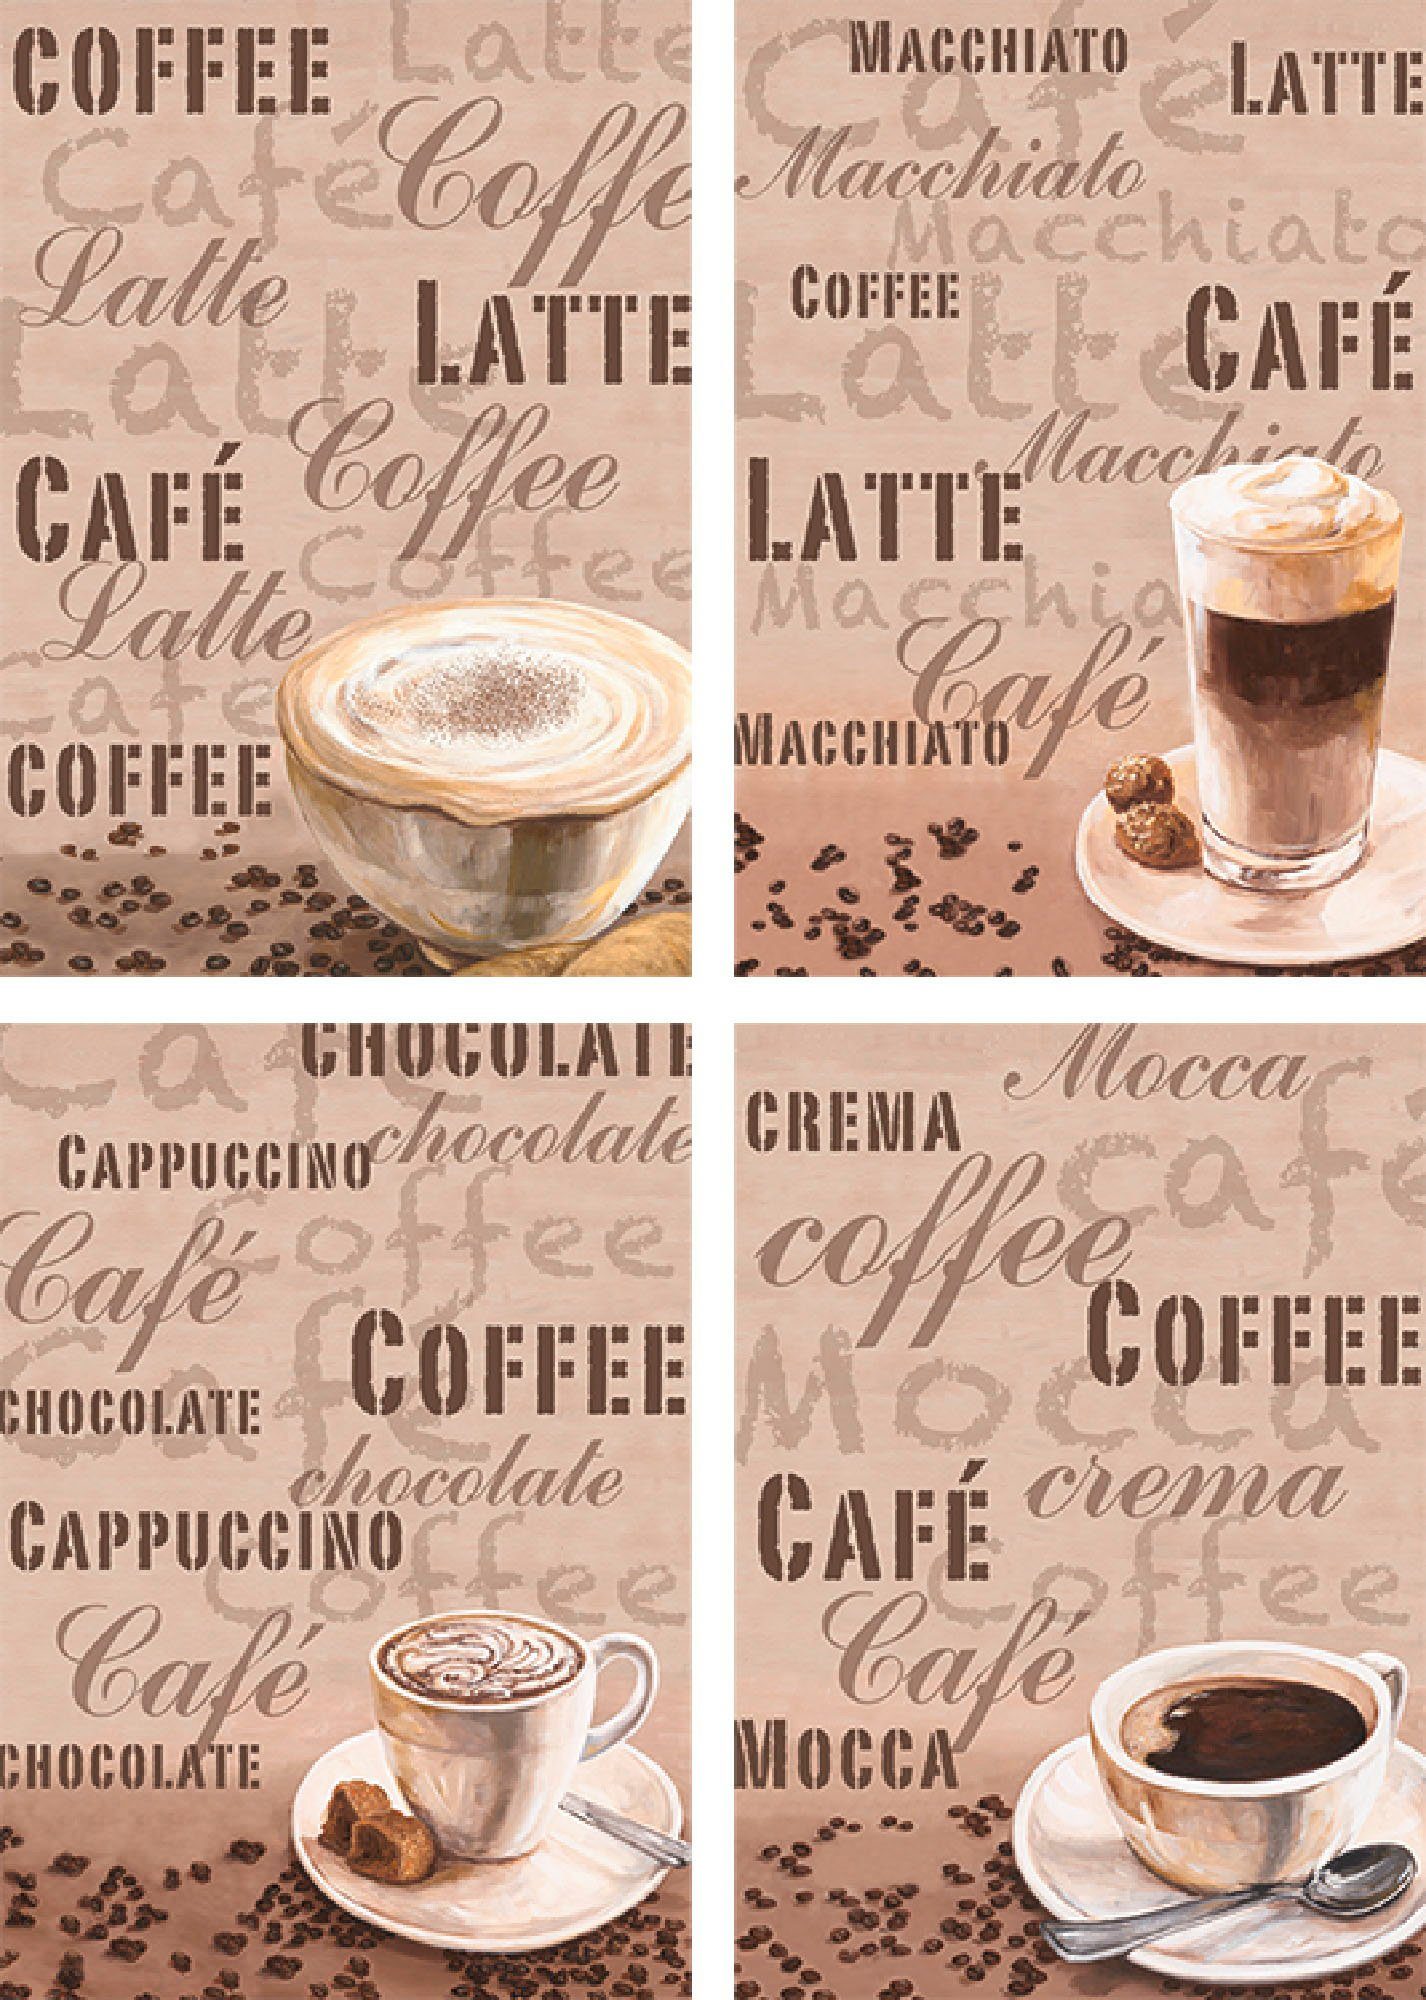 Artland Poster Milchkaffee Latte MacchiatoChocolate, Getränke (4 St), Poster,  Wandbild, Bild, Wandposter